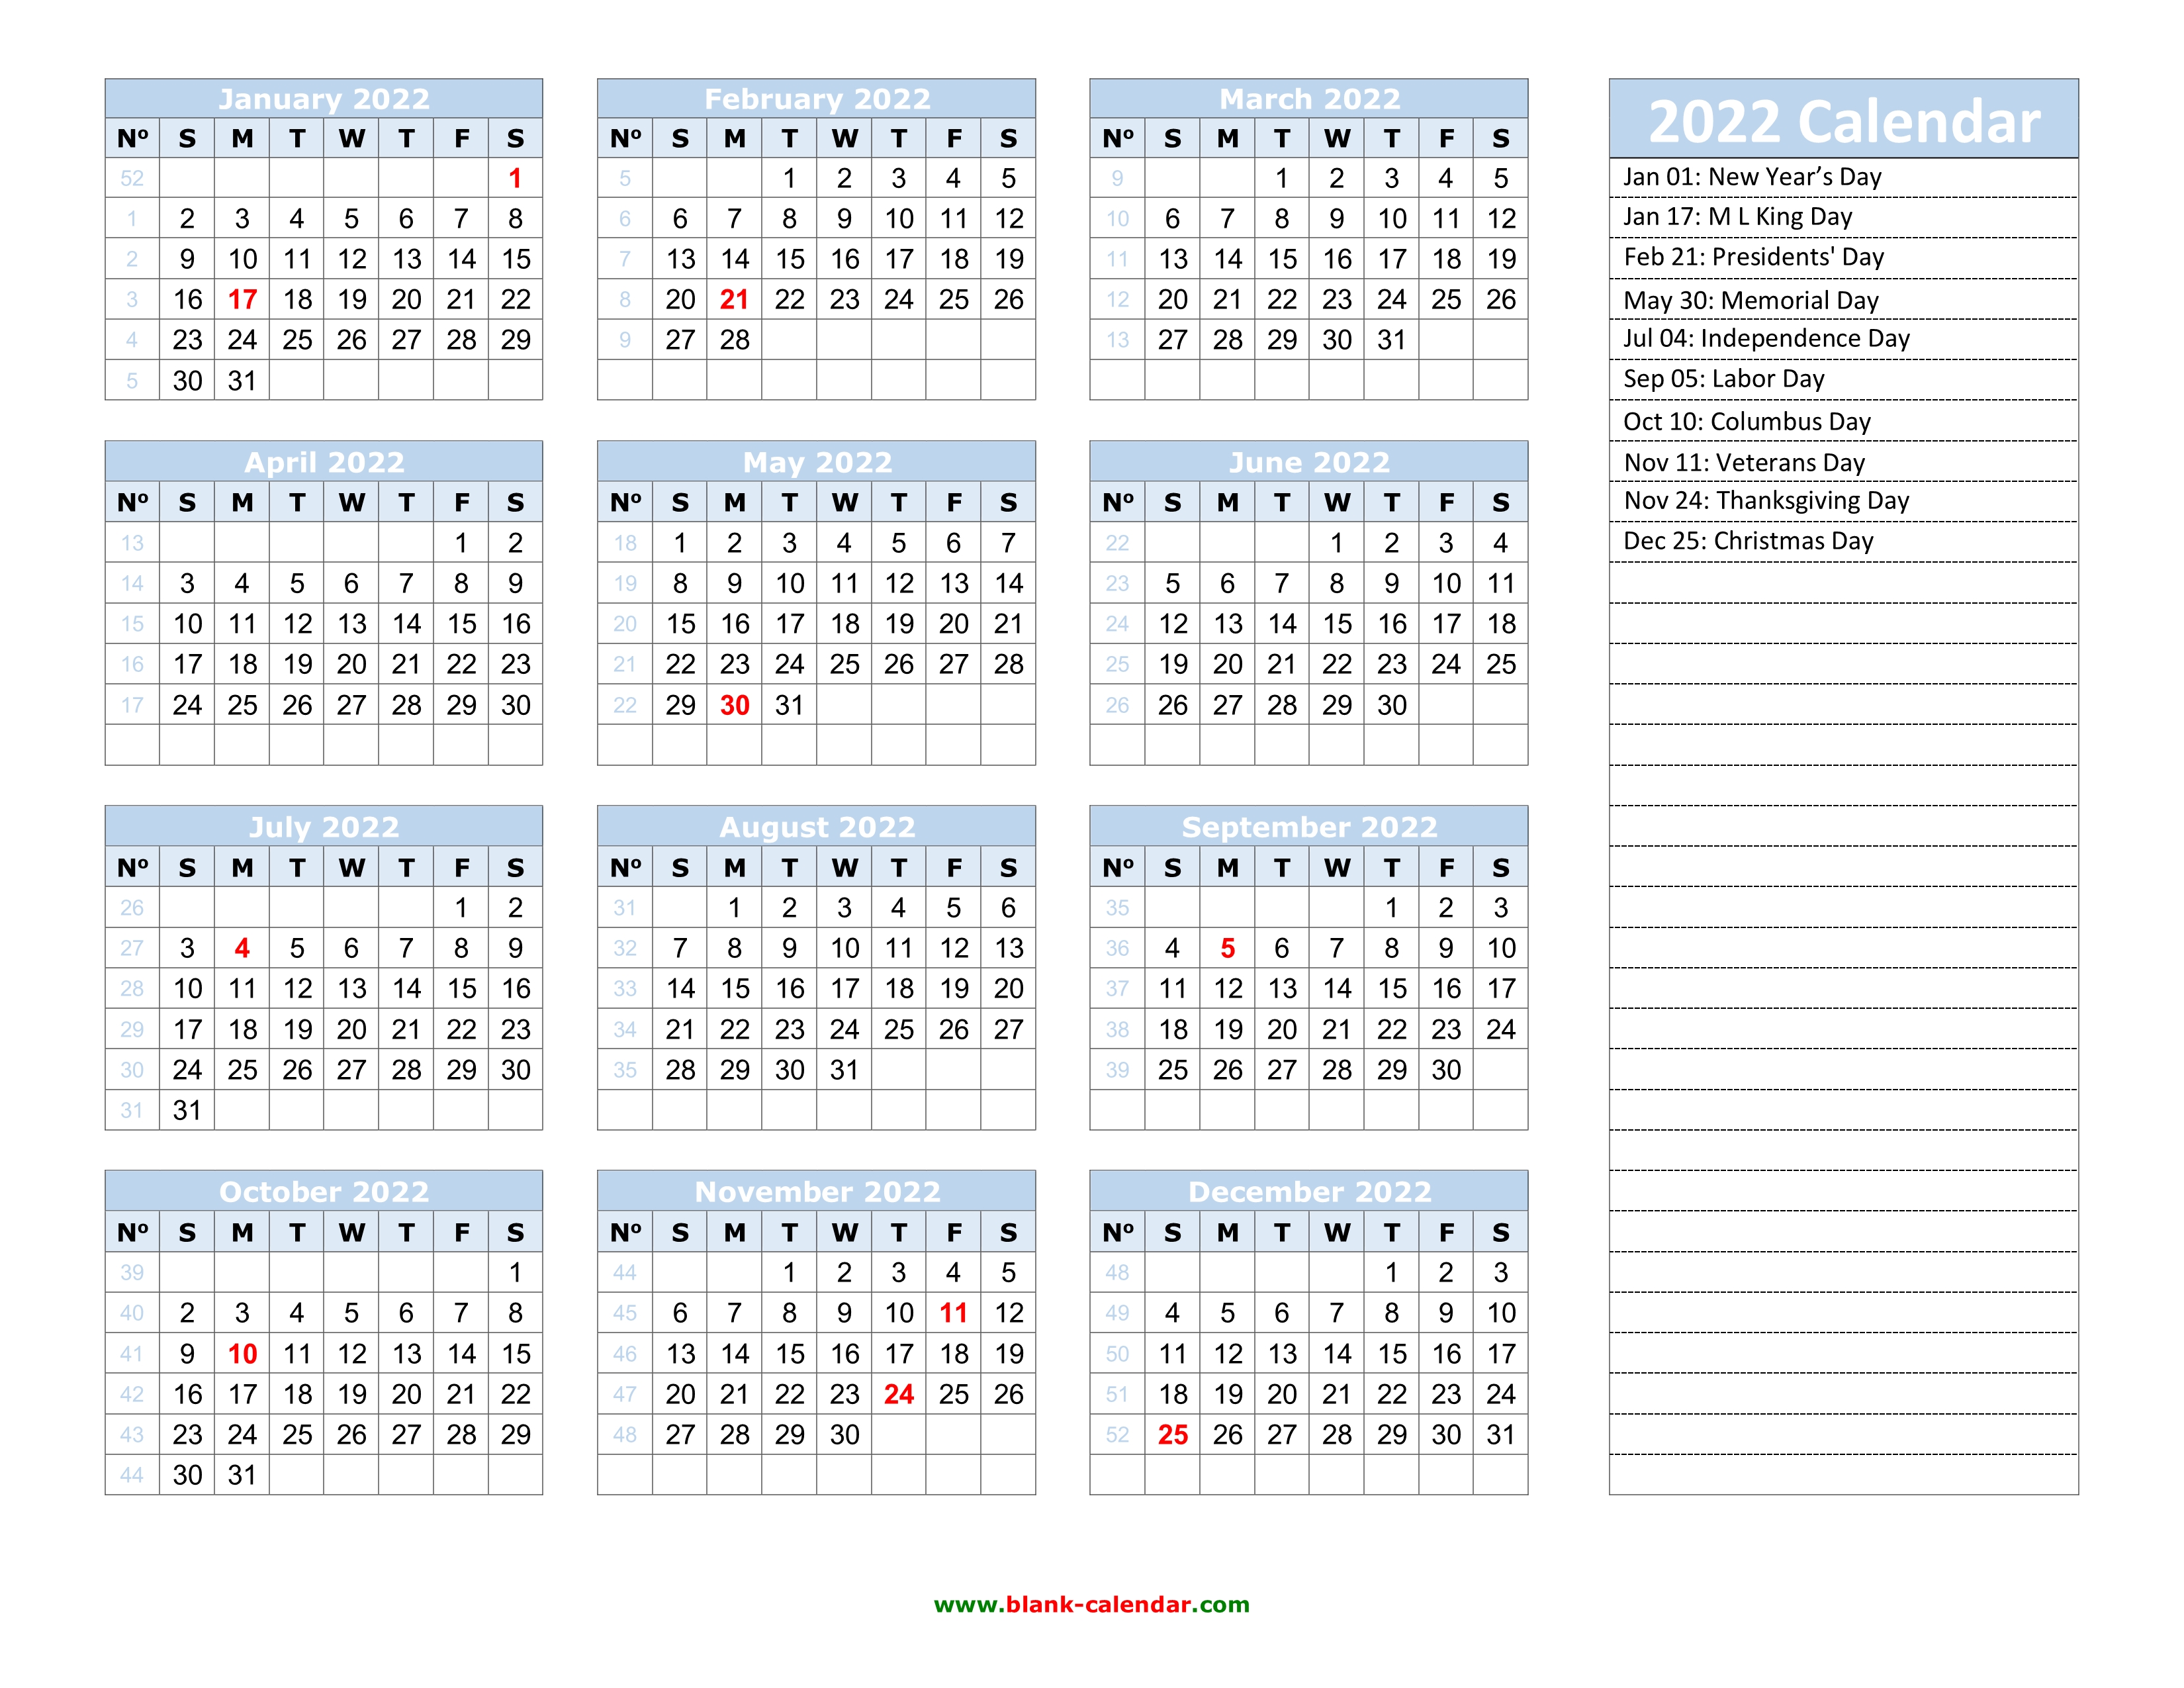 www-timeanddate-calendar-2022-customize-and-print